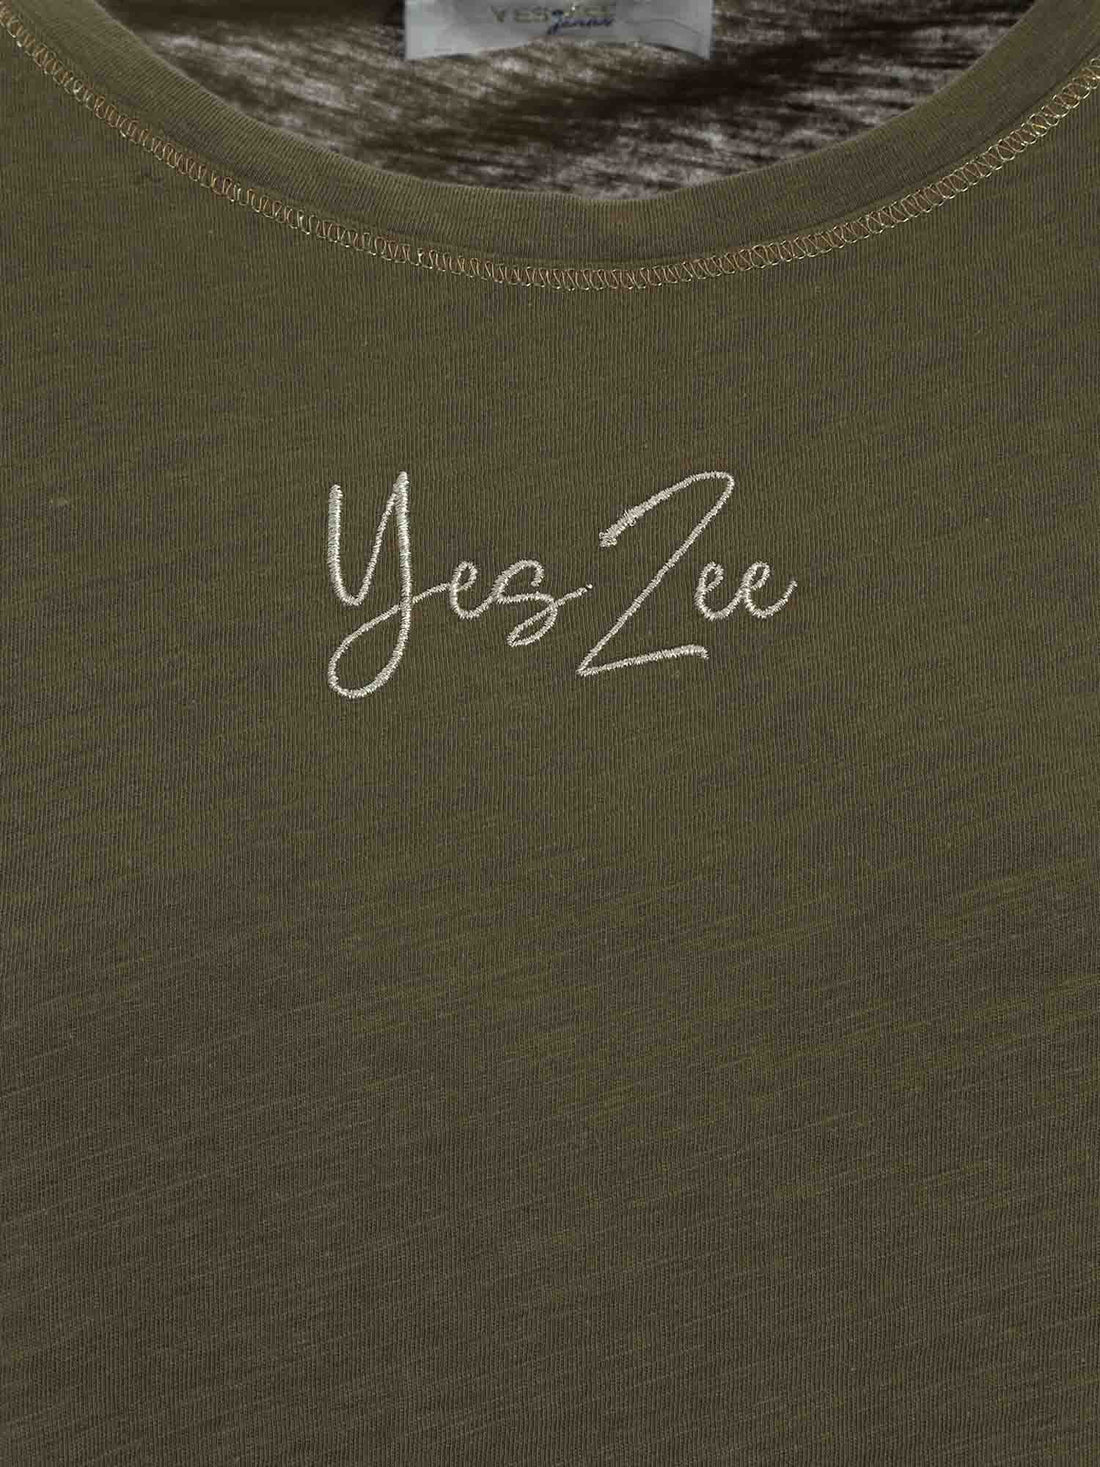 T-shirt Verde Yes-zee